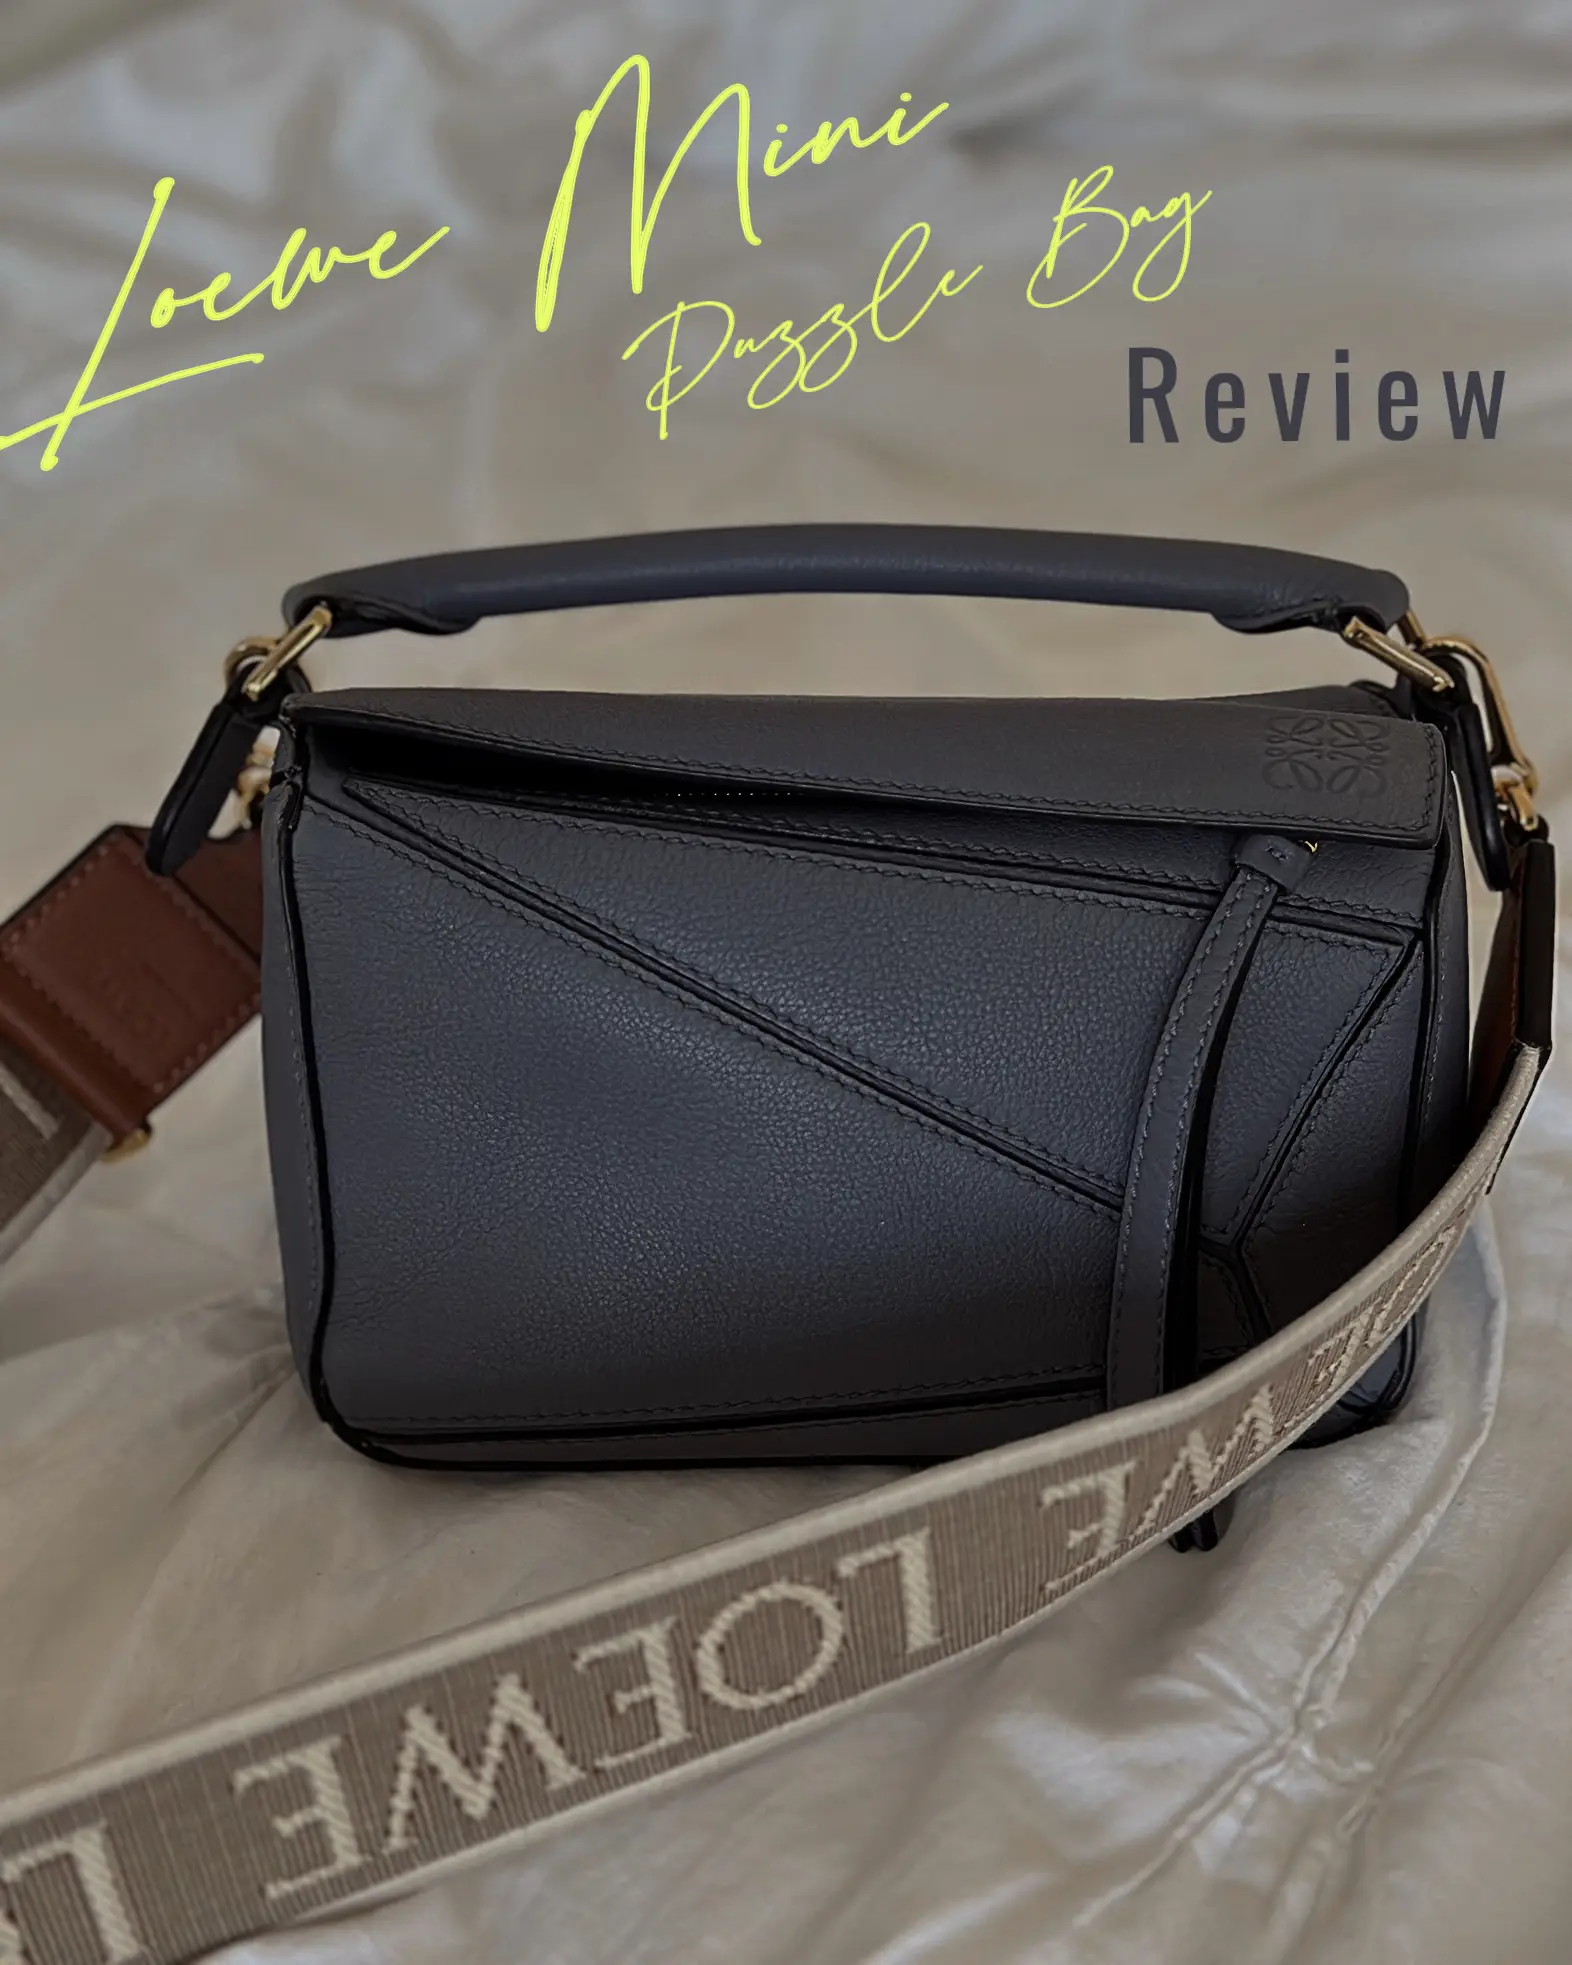 Thoughts on the Loewe mini puzzle bag? : r/handbags